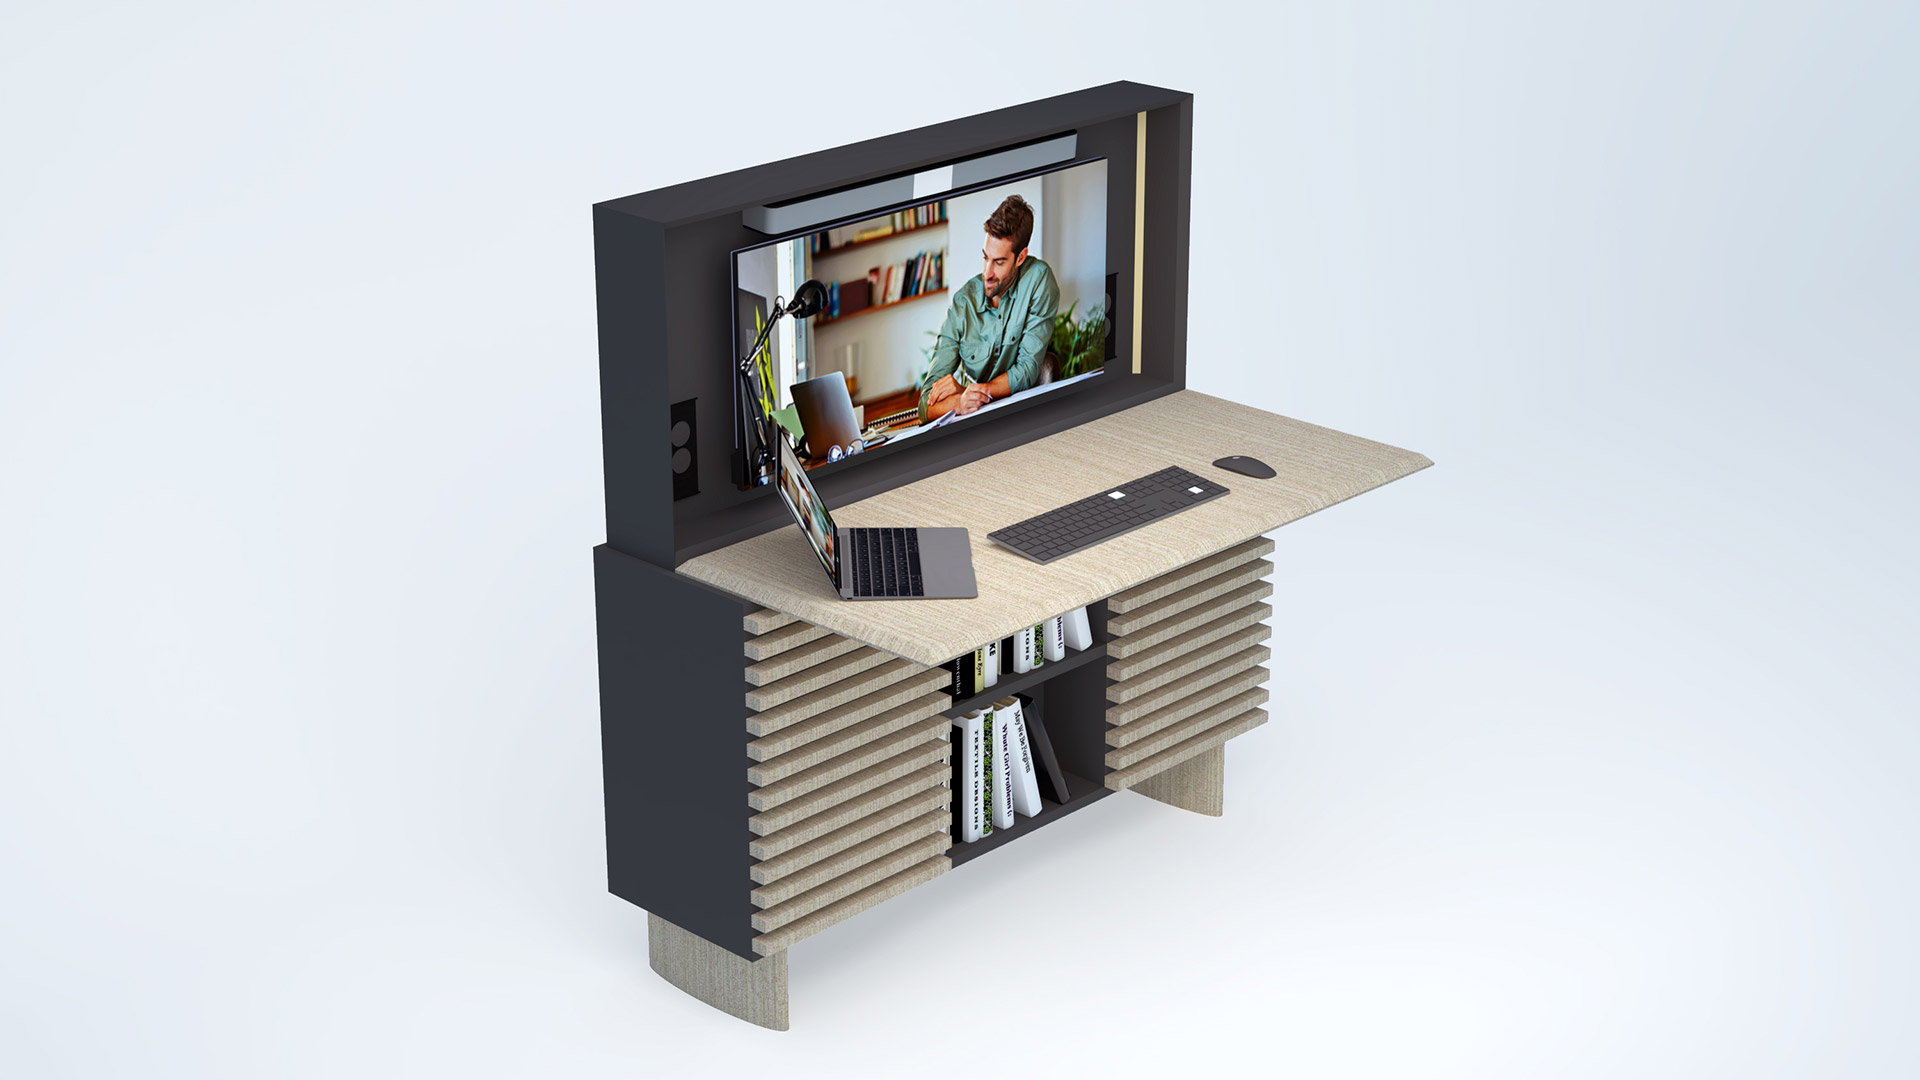 Secretary eCone B2 dedicated to teleworking and videoconferencing by Borella Art Design